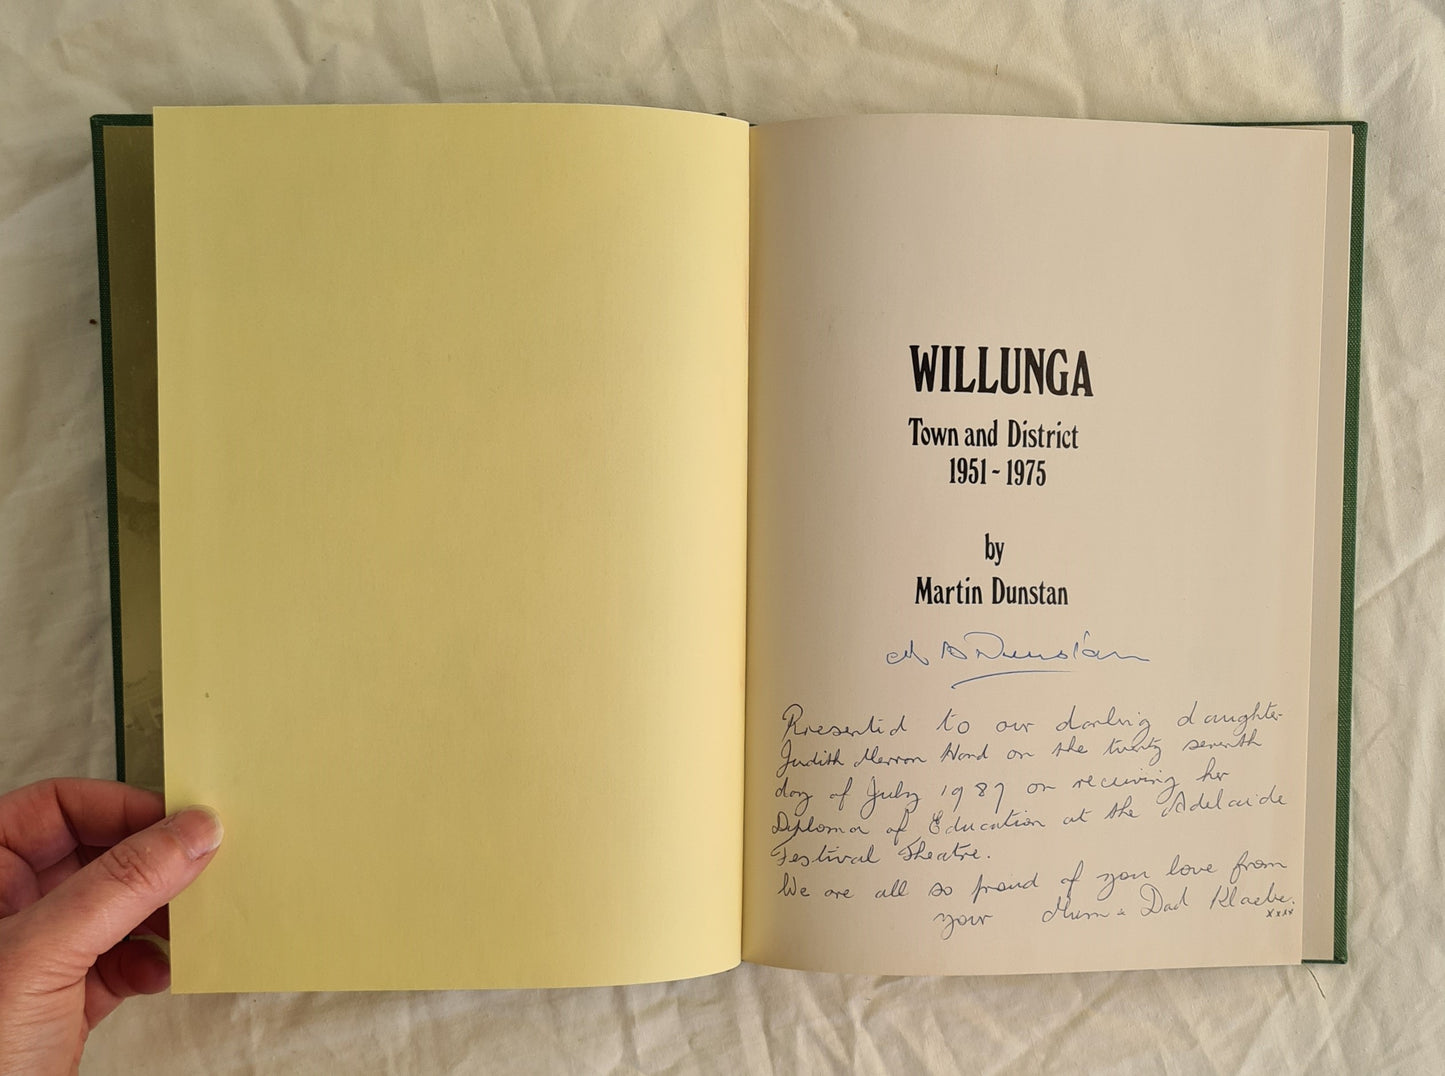 Willunga by Martin Dunstan